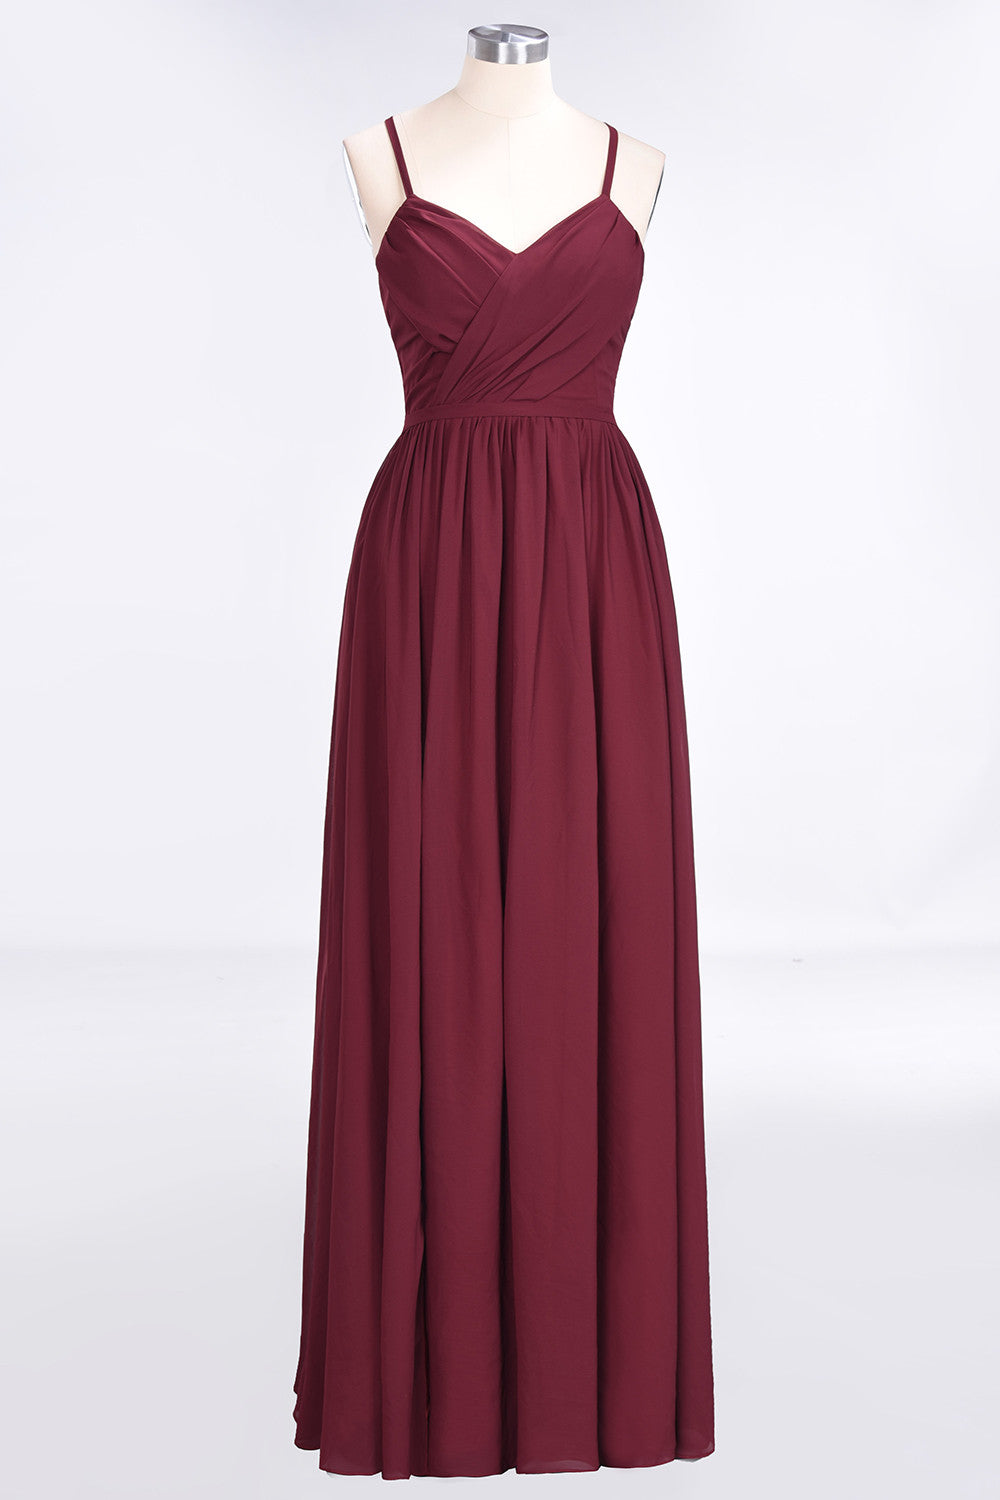 Elegant Chiffon V-Neck Burgundy Bridesmaid Dresses With Spaghetti-Straps-27dress